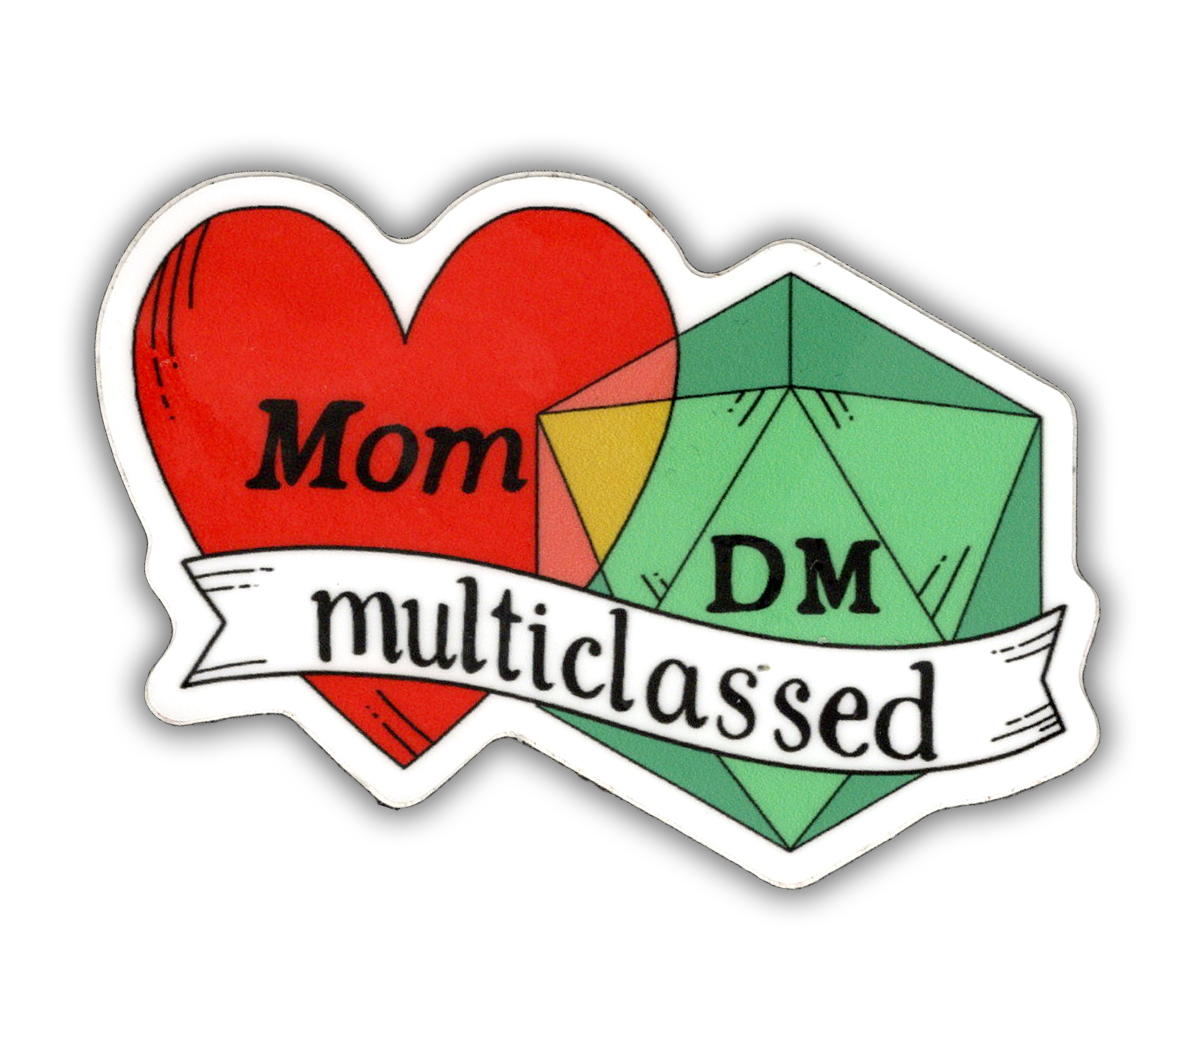 Mom/DM Multiclassed - D&D vinyl sticker - waterproof, UV-proof